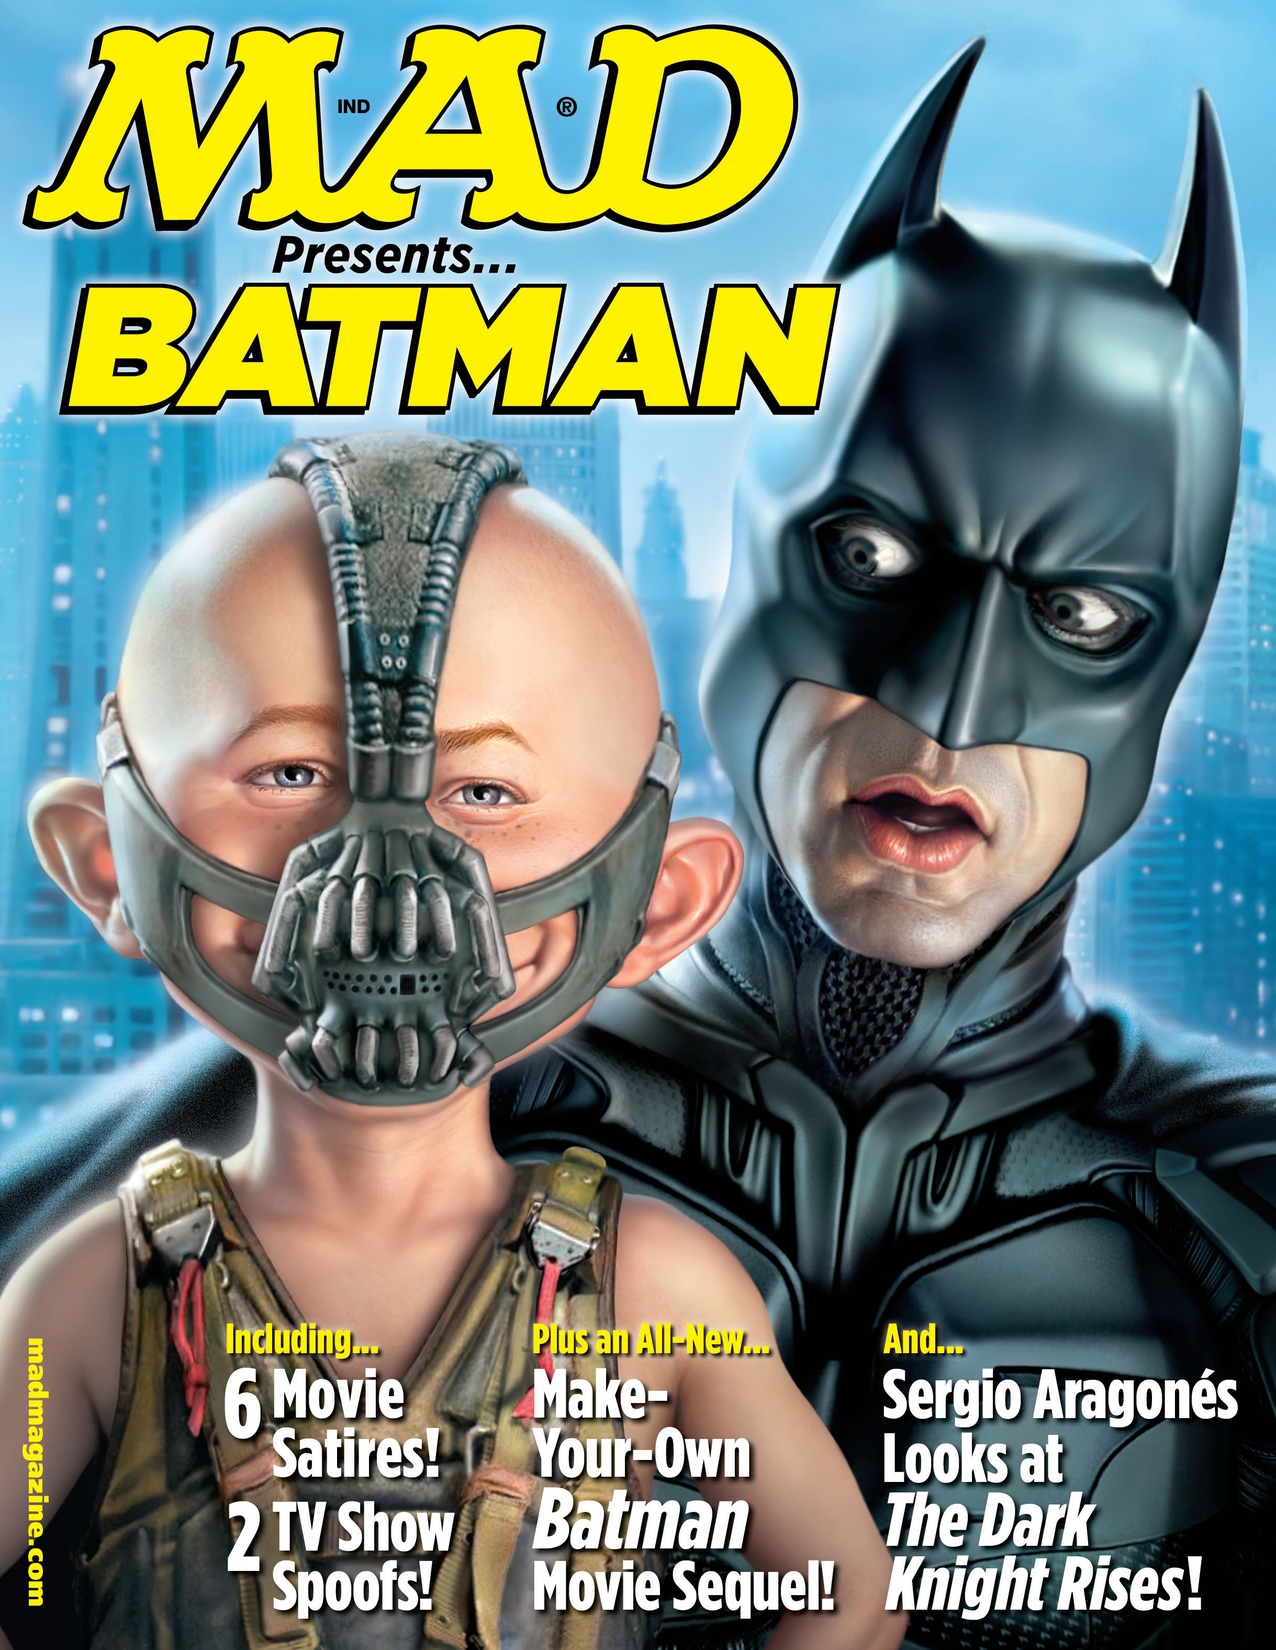 MAD Presents Batman #1 preview images